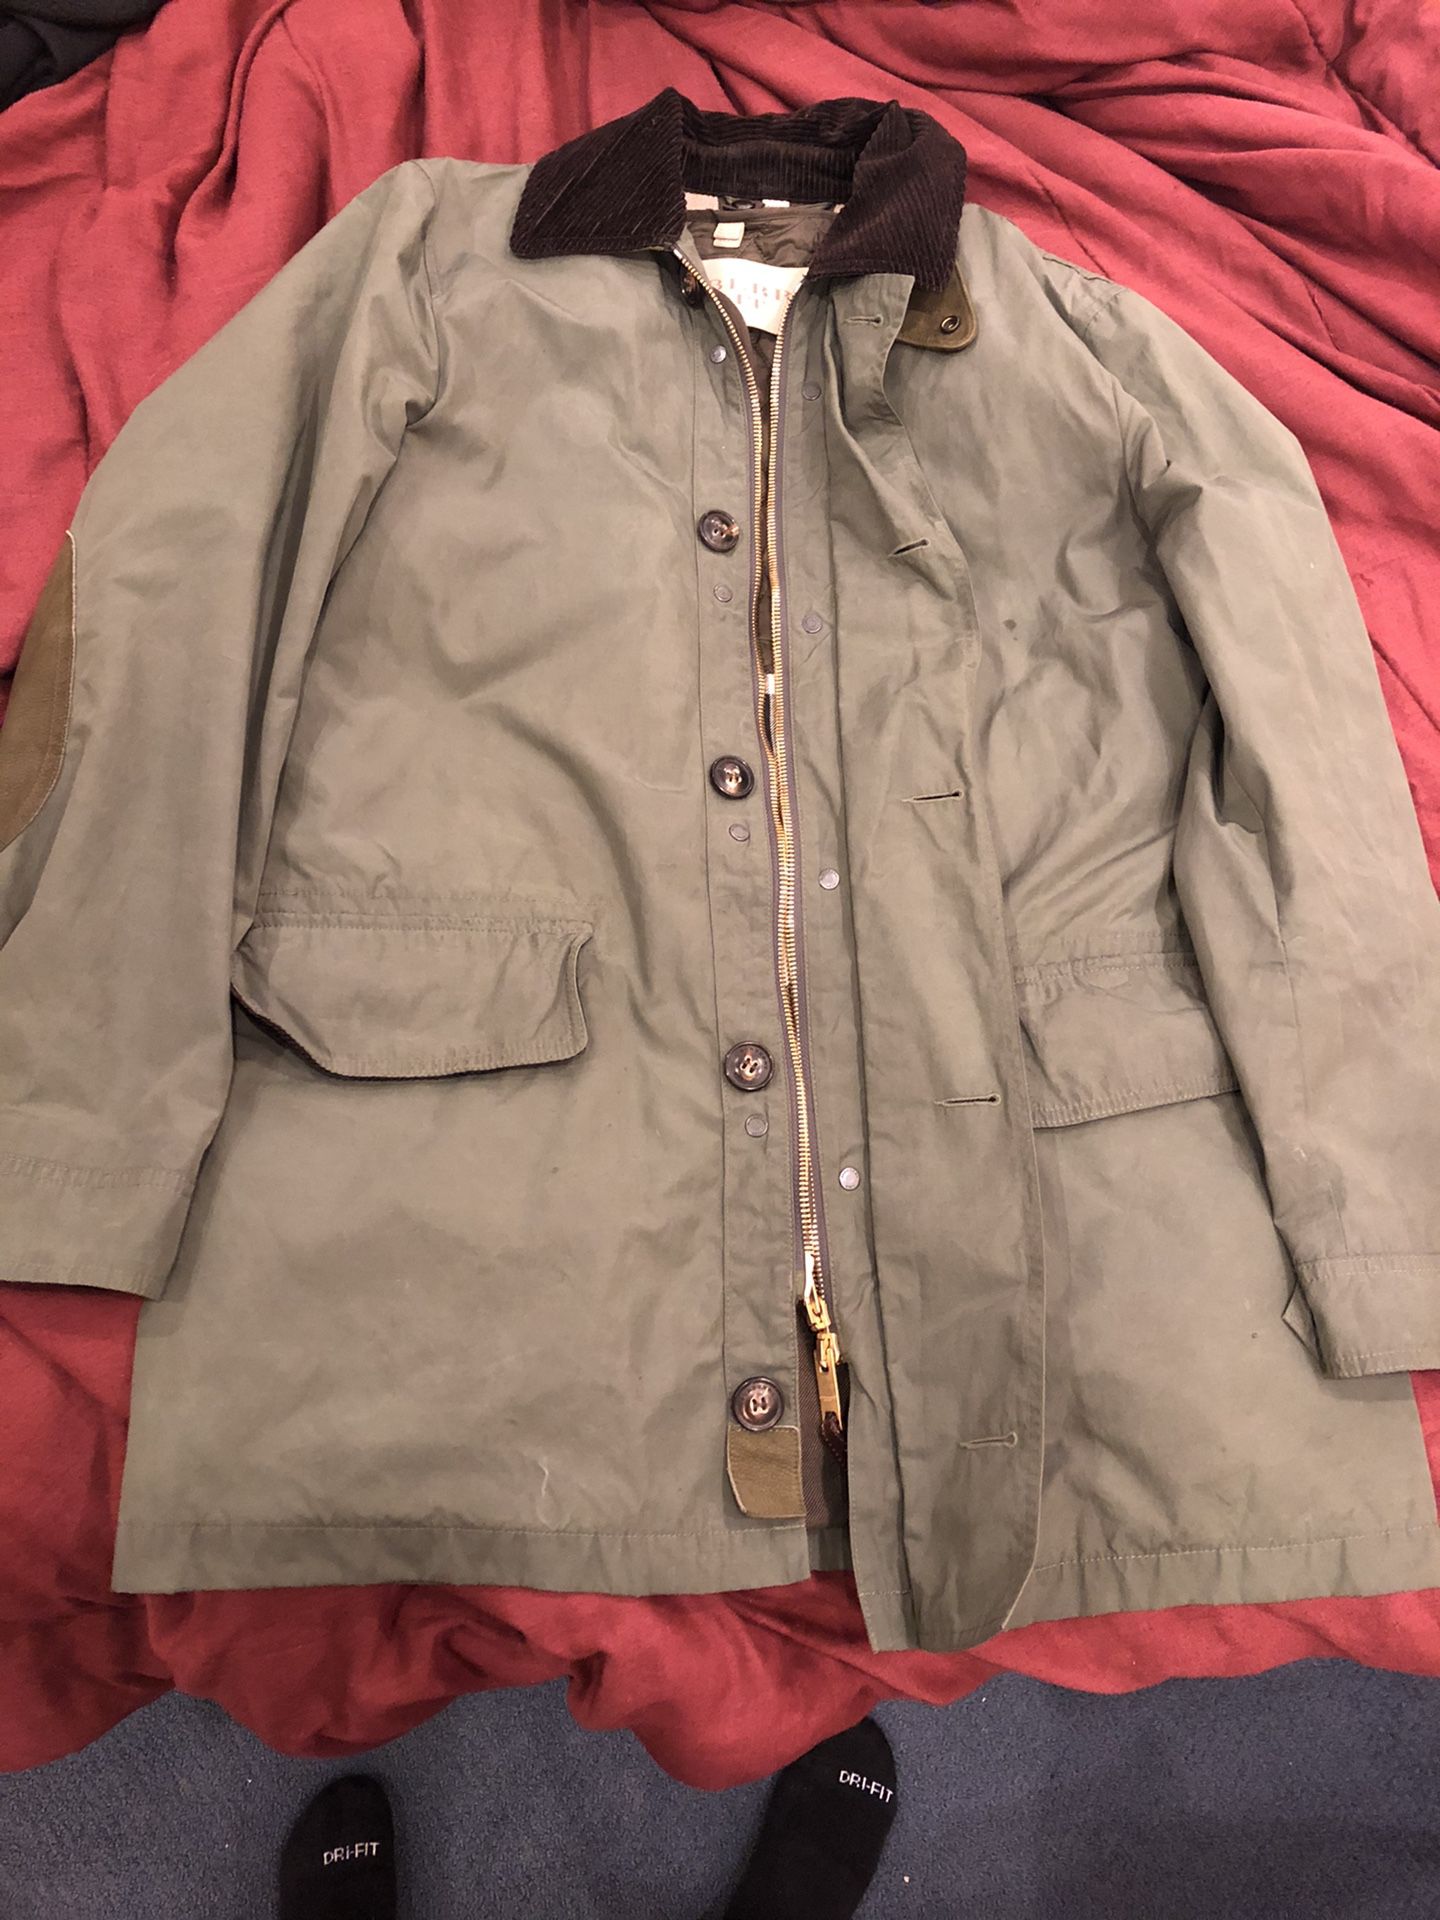 Burberry Brit trench coat with detachable vest size M